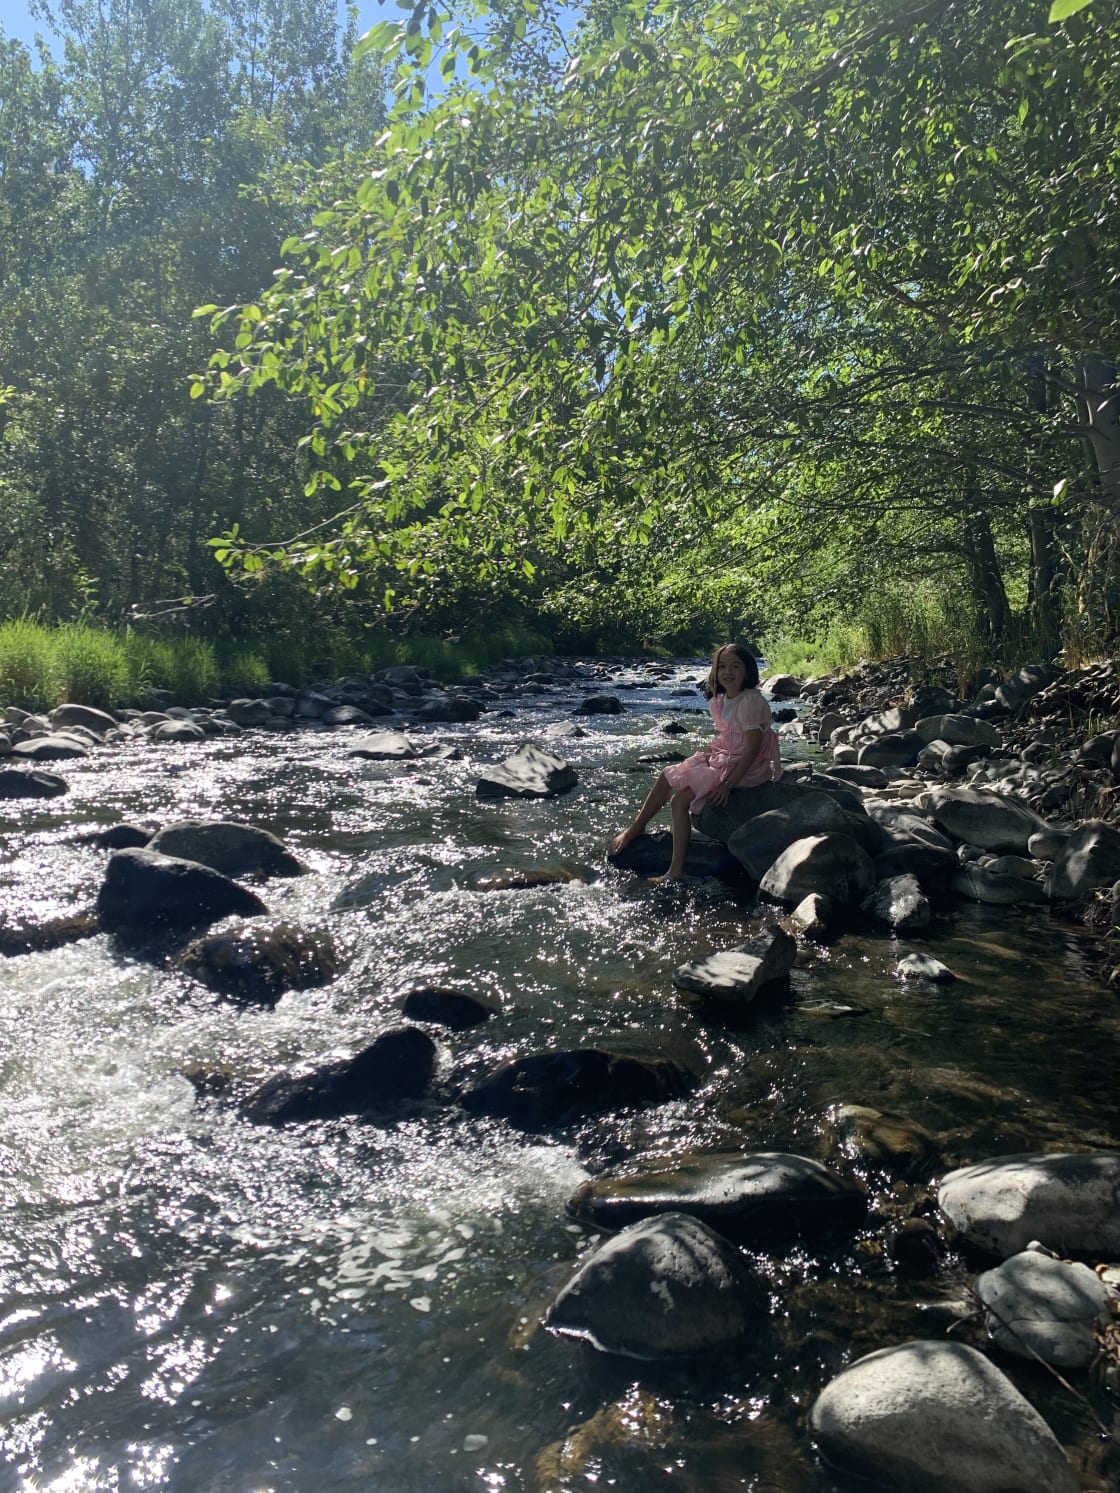 Enjoying the creek